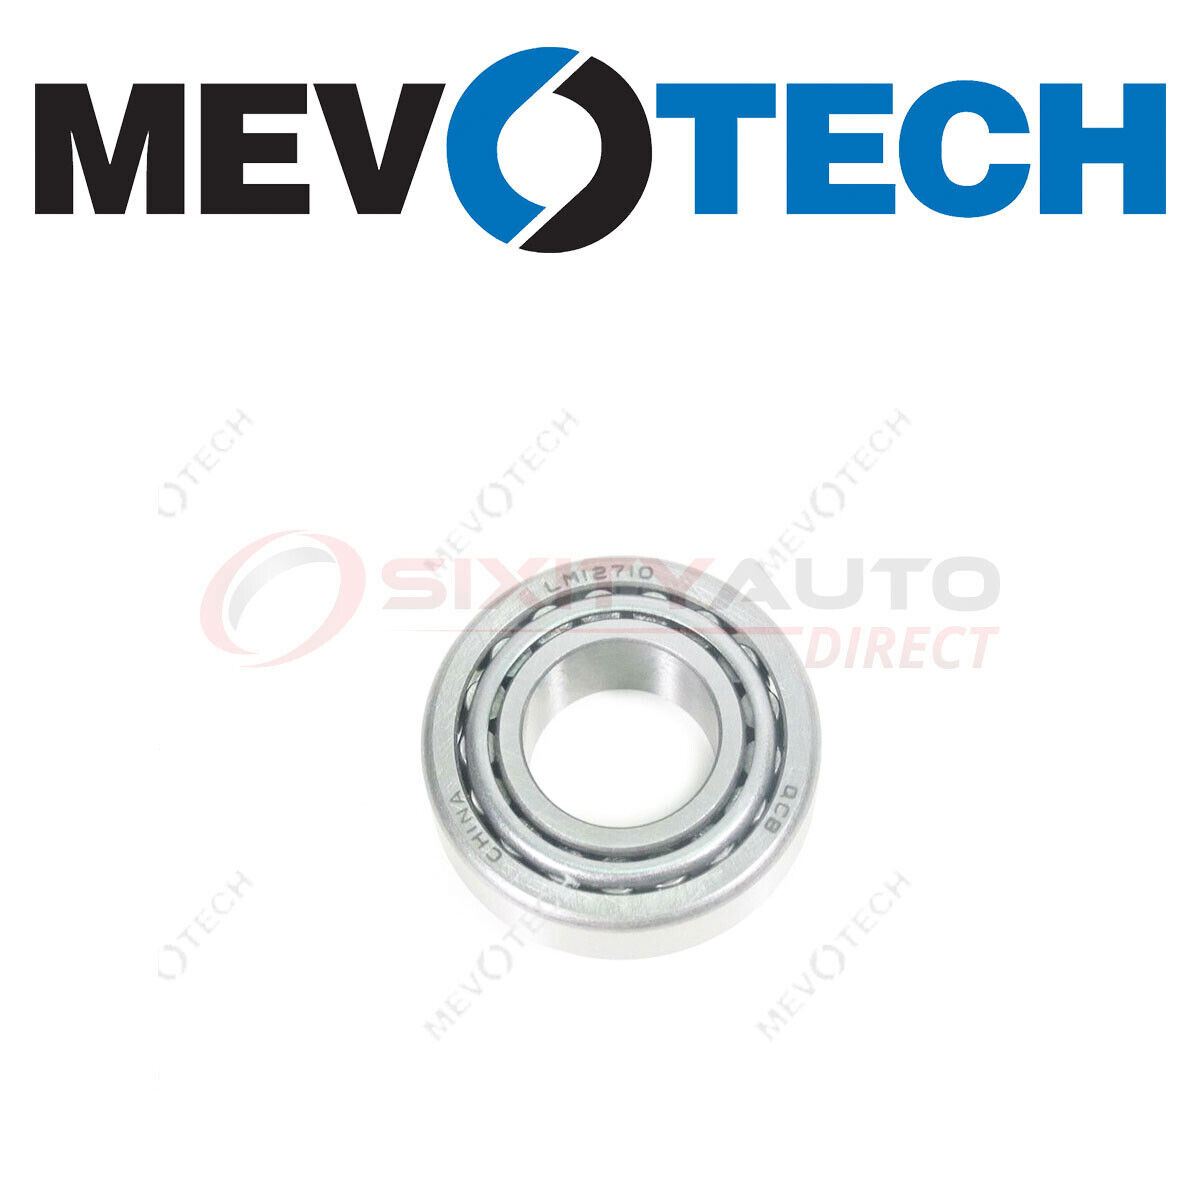 Mevotech Wheel Bearing for 2002-2003 Mercedes-Benz C32 AMG 3.2L V6 - Axle oq